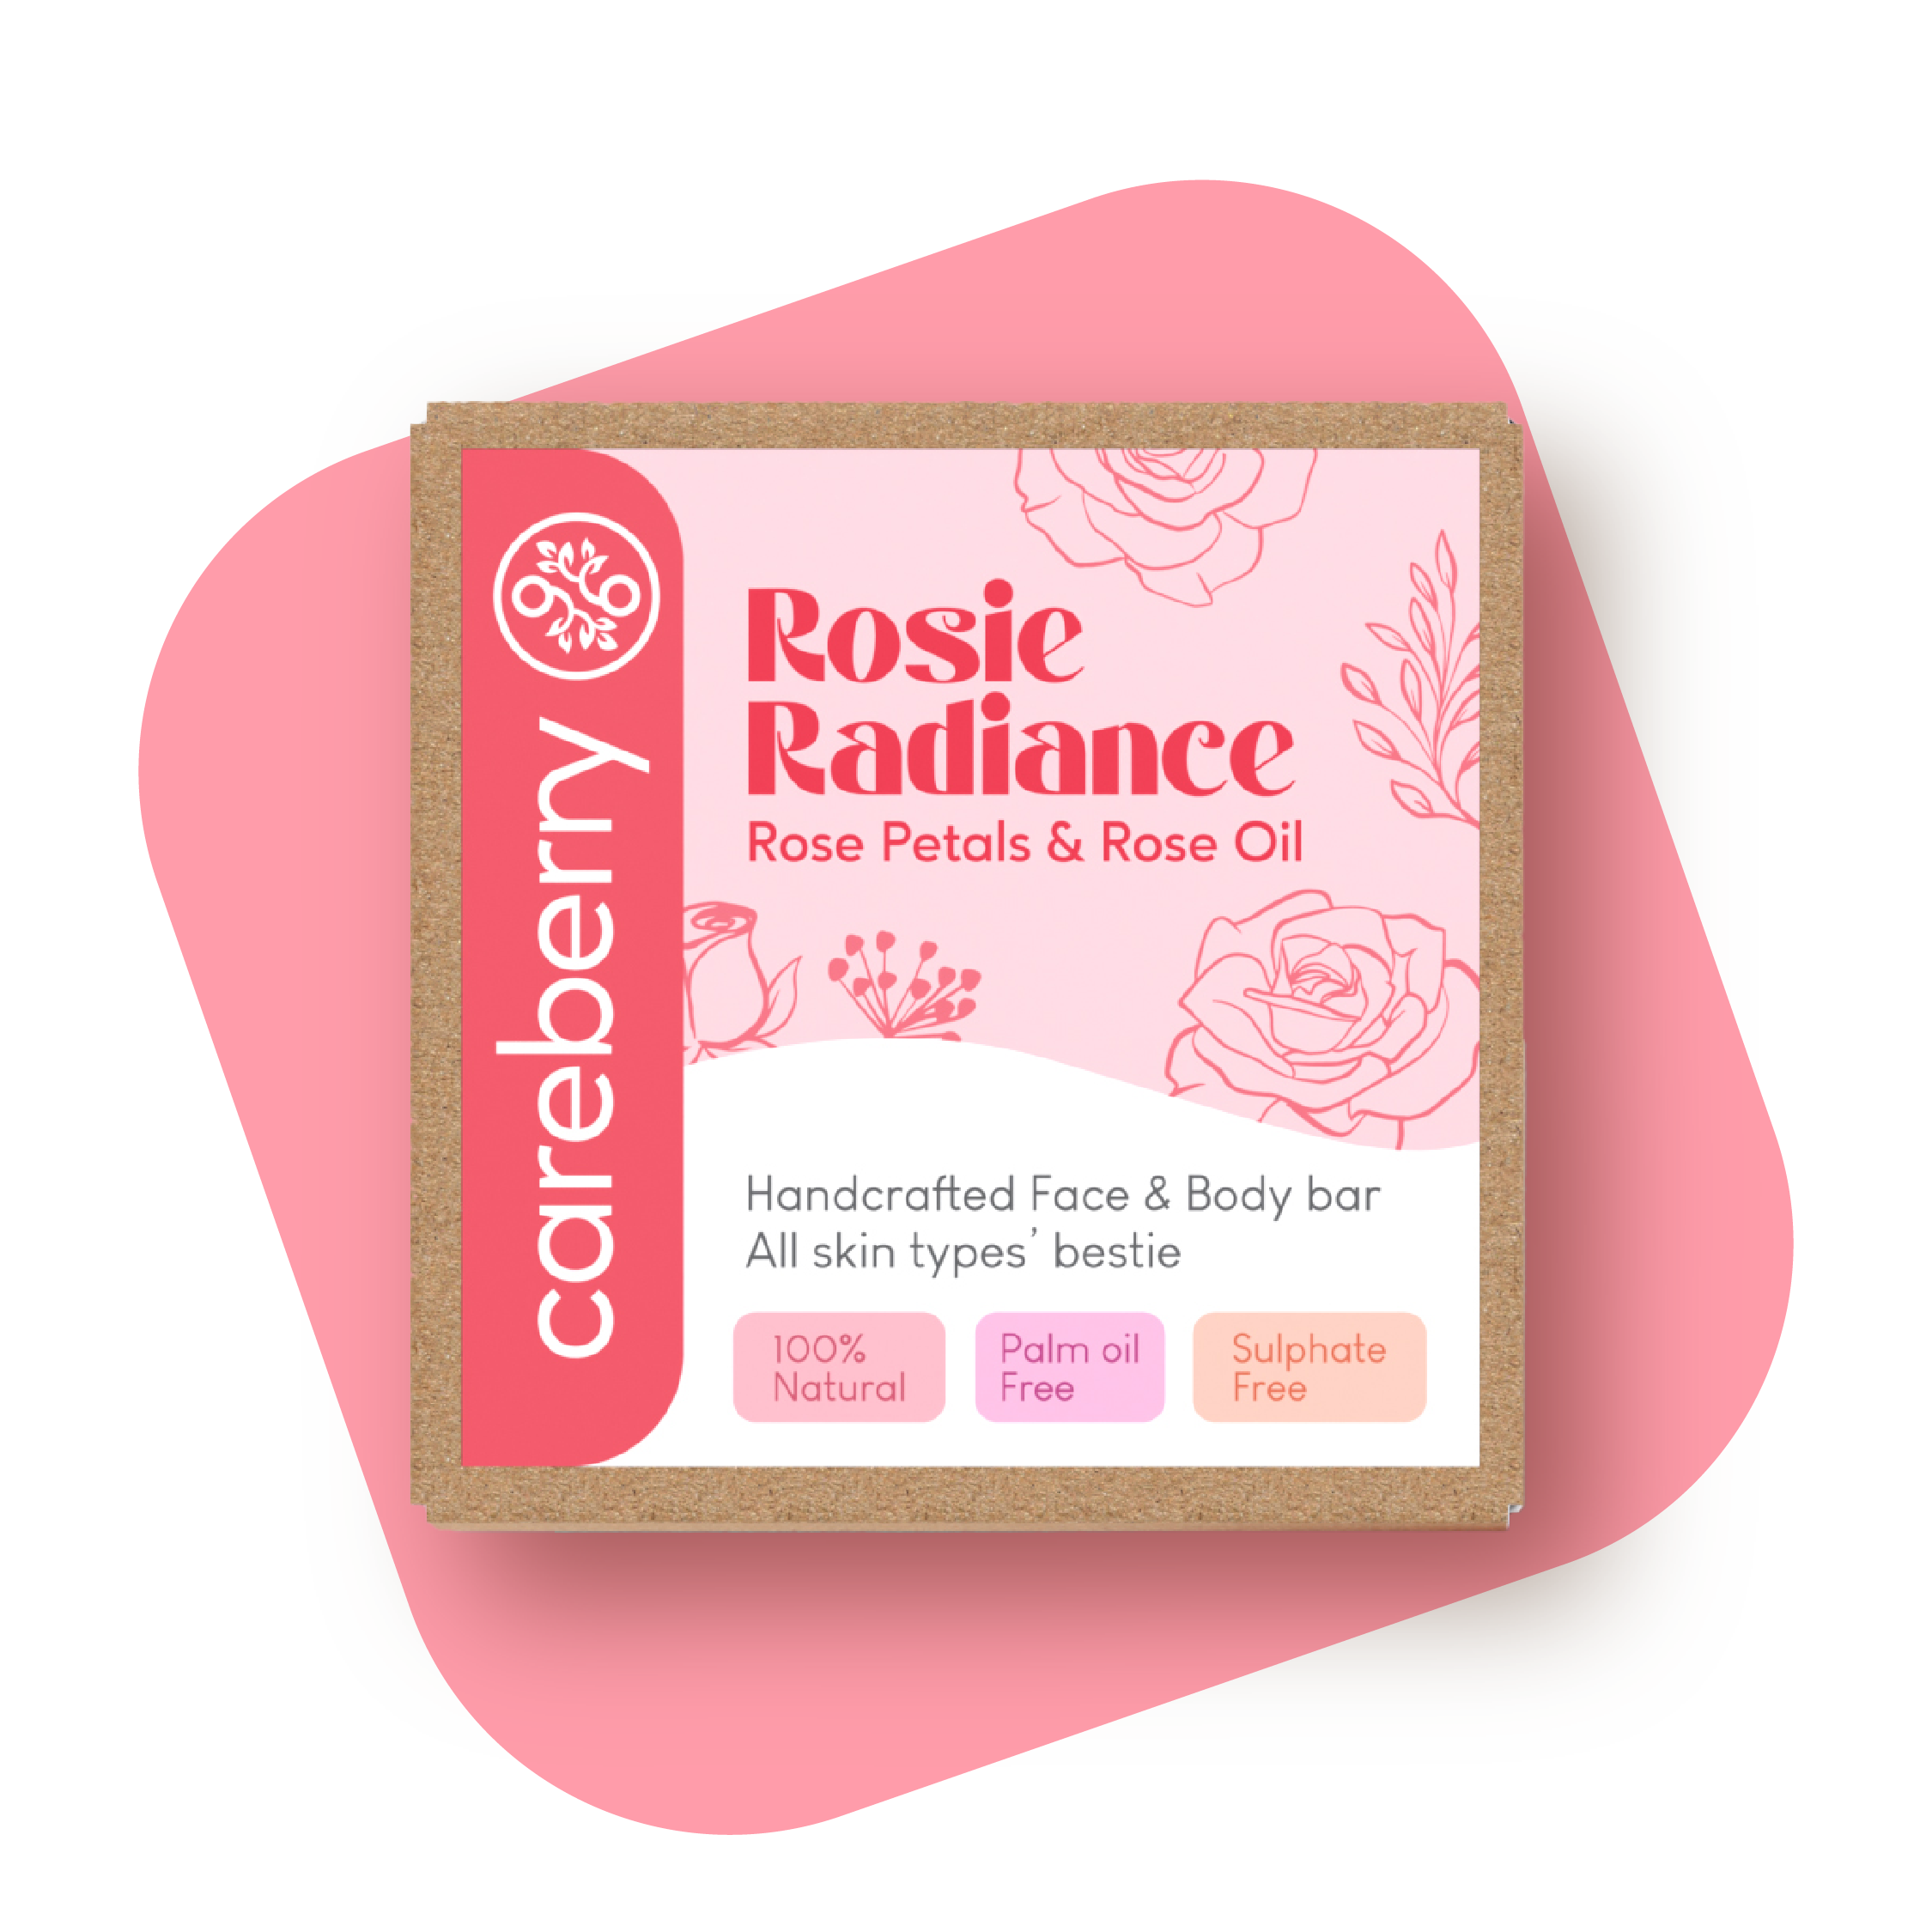 Rosy Radiance: Rose Petals & Rose Oil Face & Body Bar